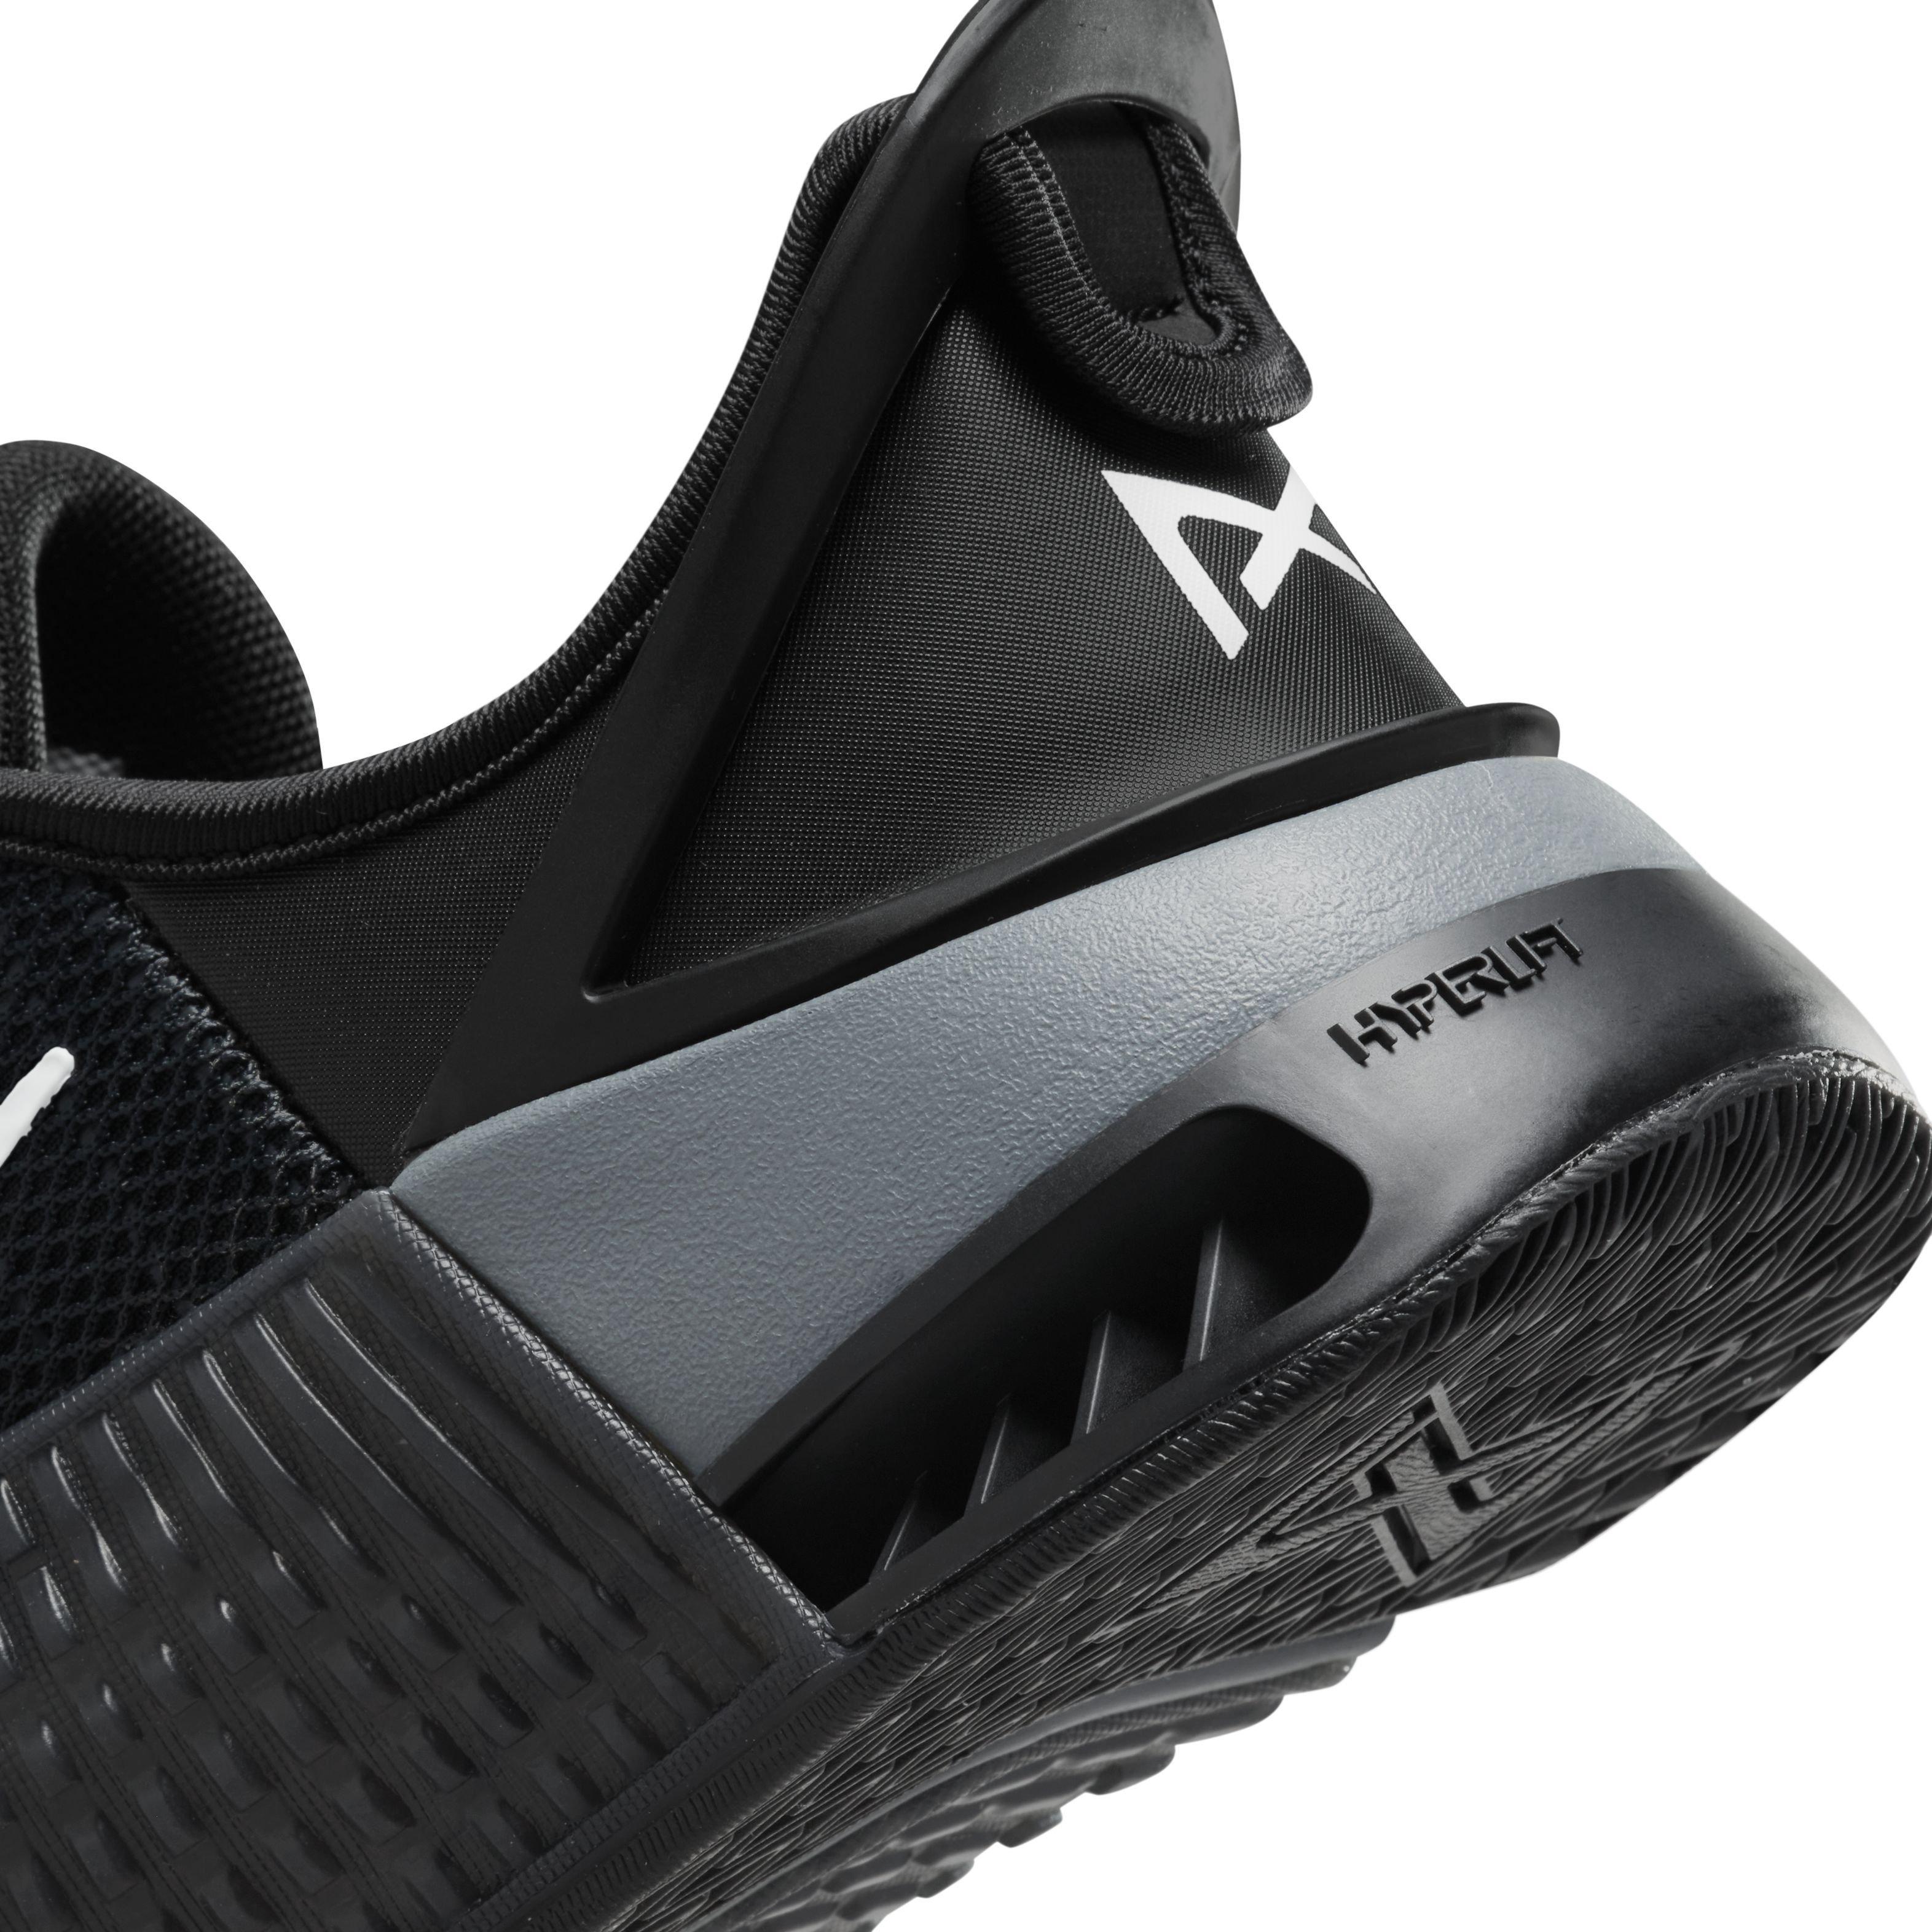 Training shoes Nike Metcon 9 FlyEase - Nike - Men's running shoes